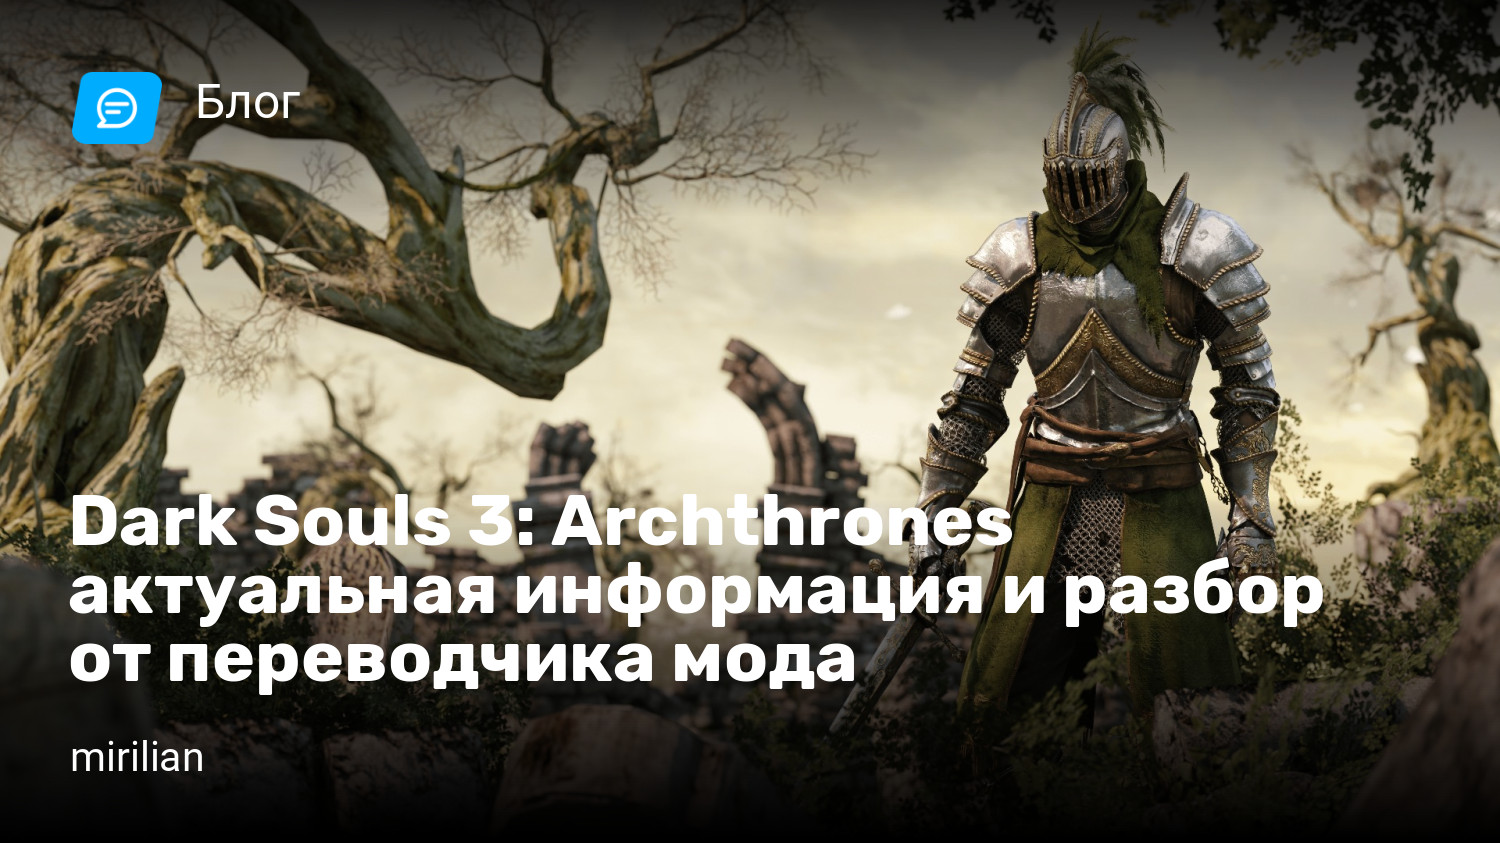 Dark souls archthrones demo. Dark Souls 3 archthrones. Dark Souls archthrones. Dark Souls III archthrones all Weapon.